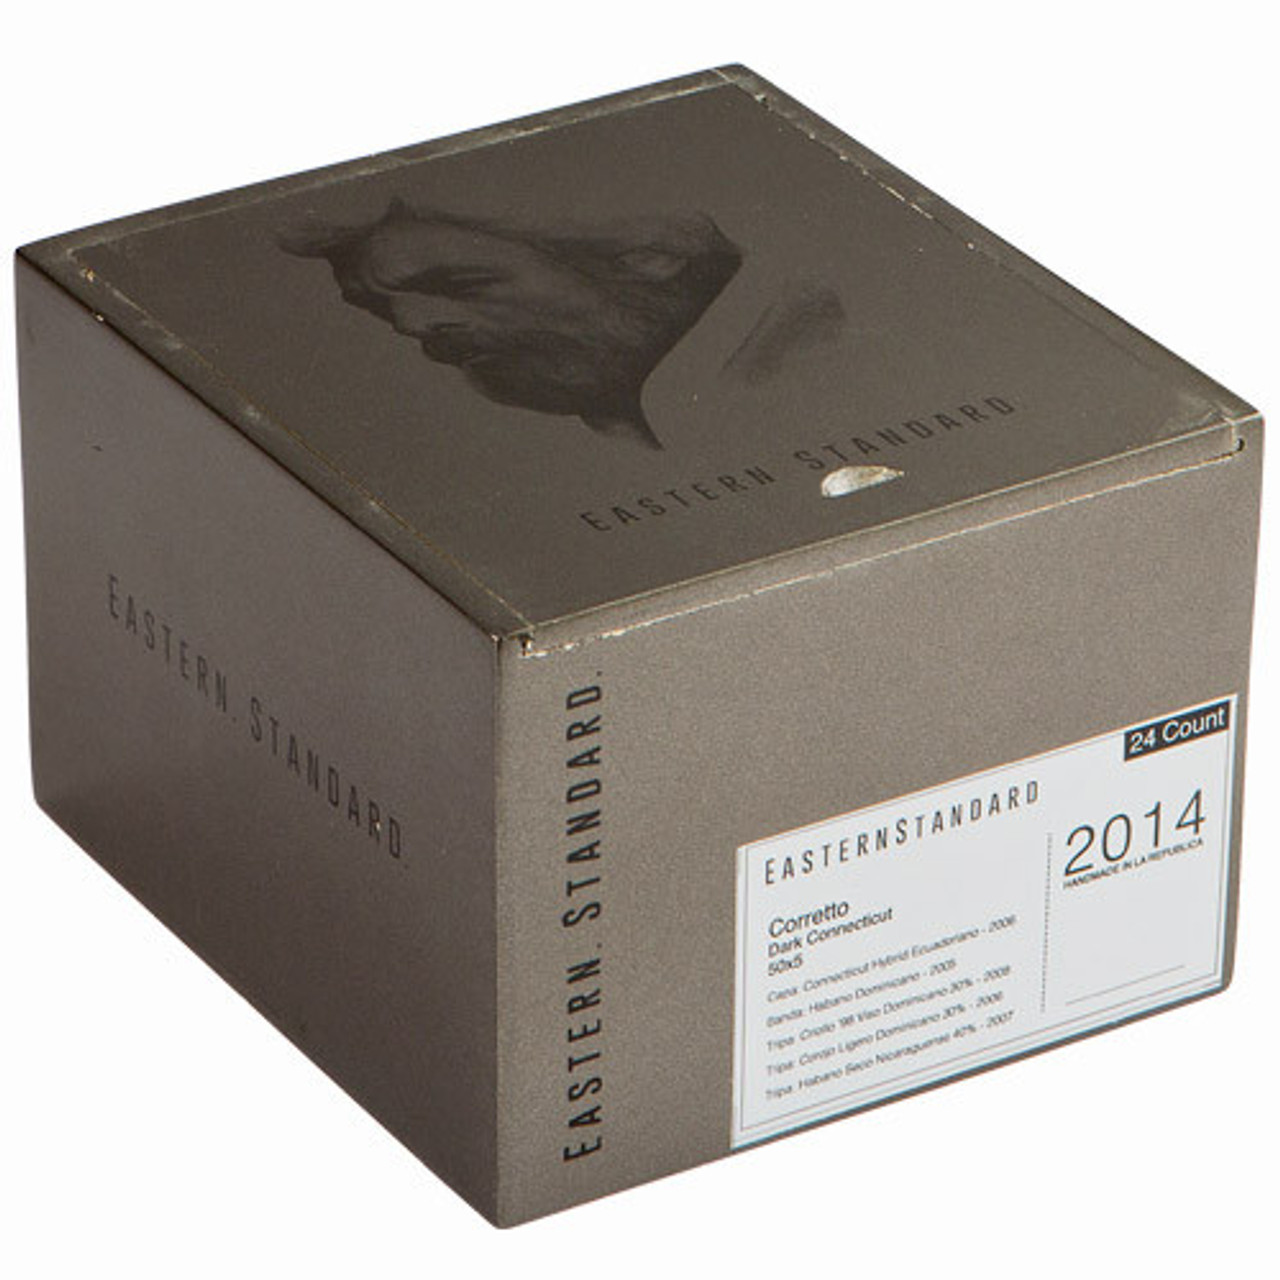 Caldwell Eastern Standard Cypress Room Cigars - 6 x 54 (Box of 24) *Box